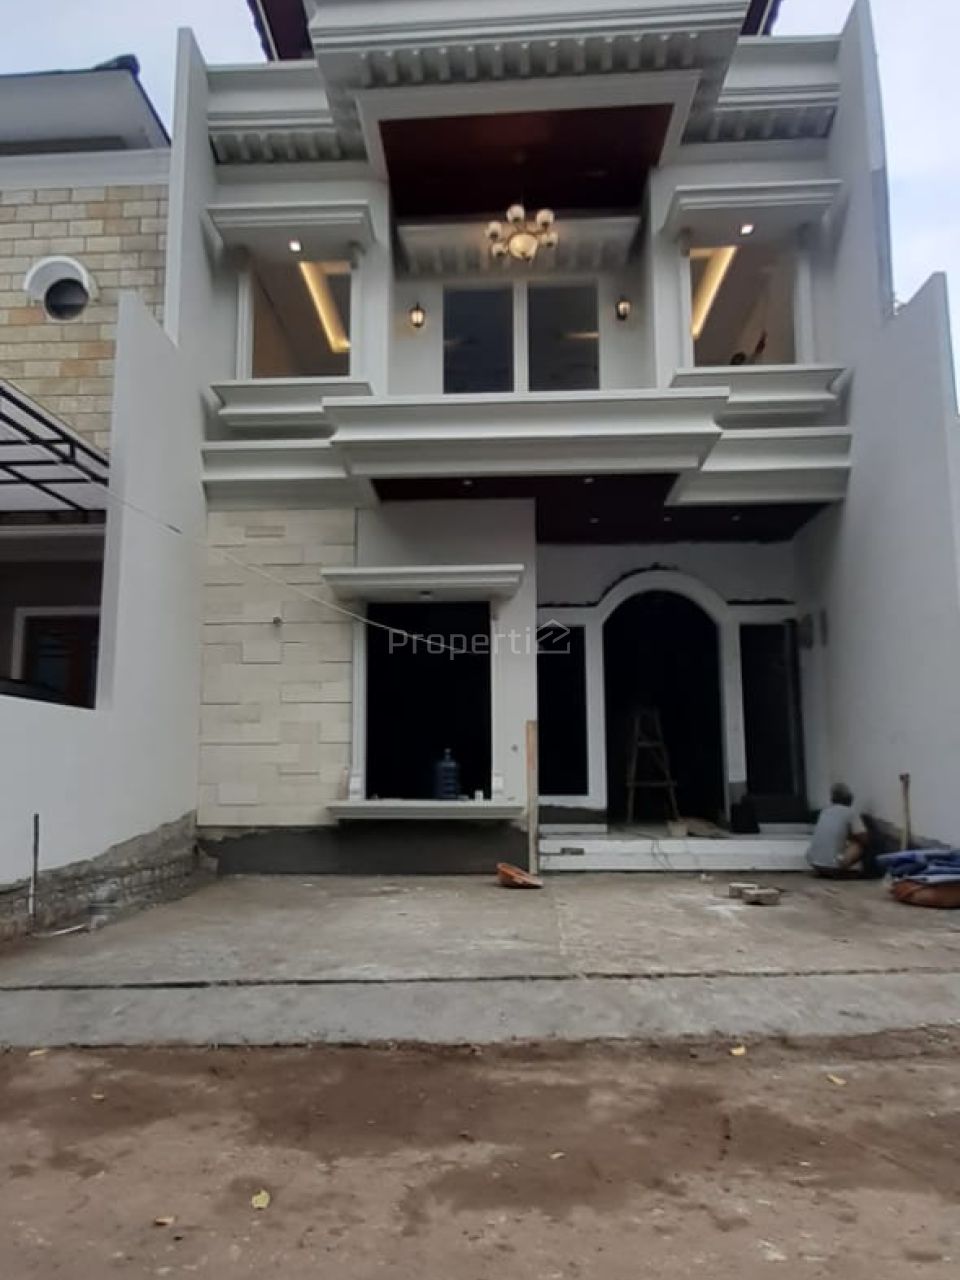 New House in Lebak Bulus, South Jakarta, DKI Jakarta